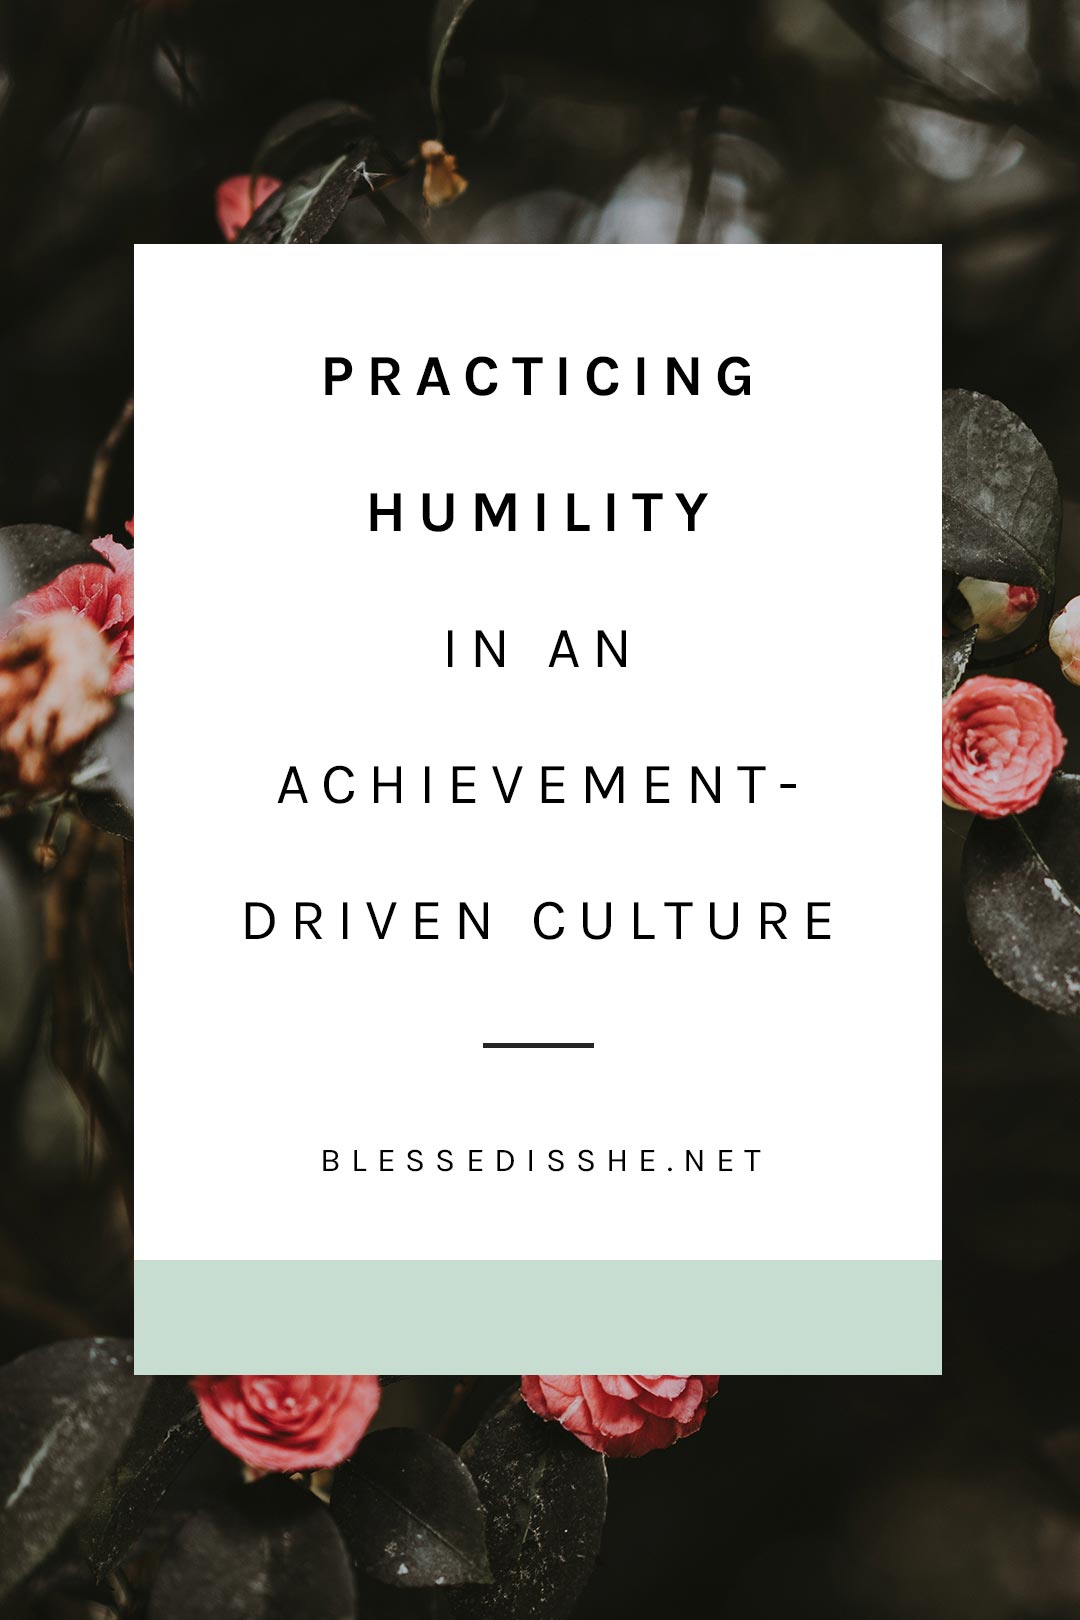 should i pray the litany of humility